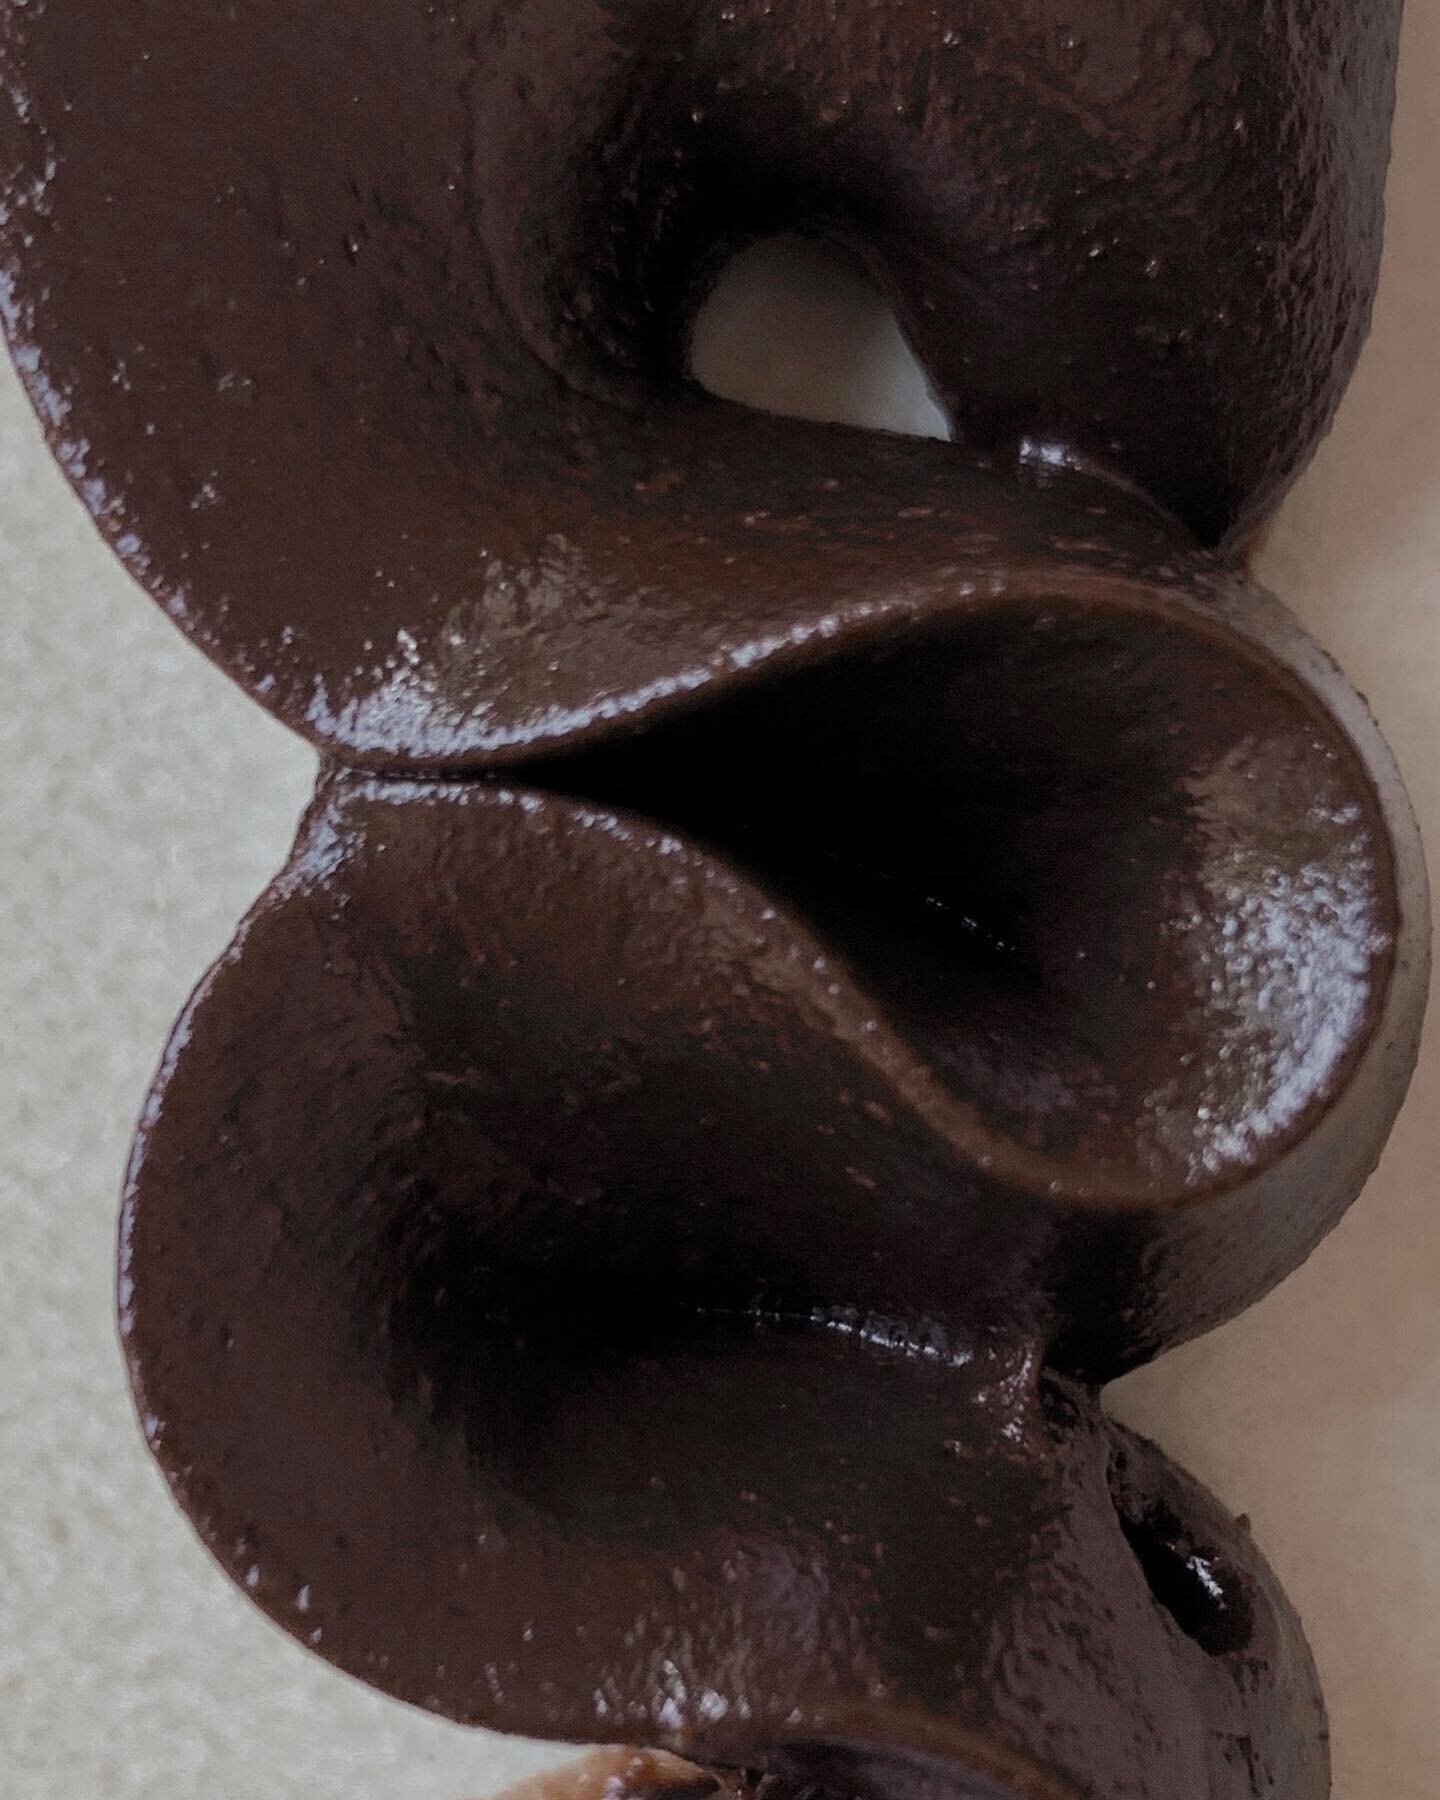 textured chocolate ganache 
____
#chocolatetextures #chocolateganache #testswithchocolate #texturetests #sosmooth #glossychocolate #recipedevelopmentwithchocolate #alexandramitsiou